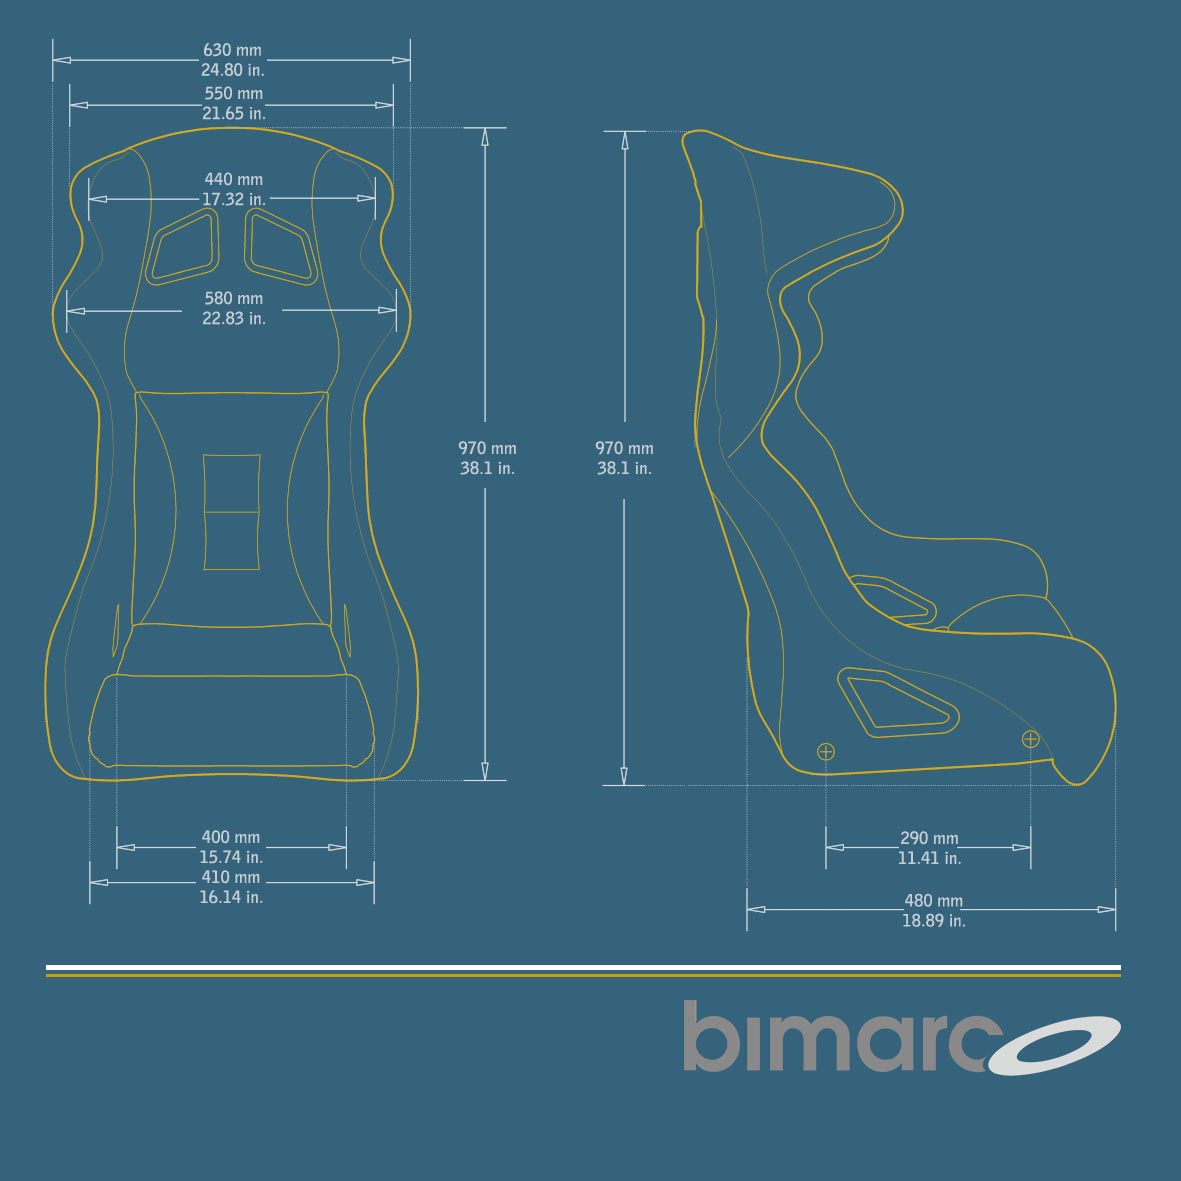 Bimarco Racer dimensions